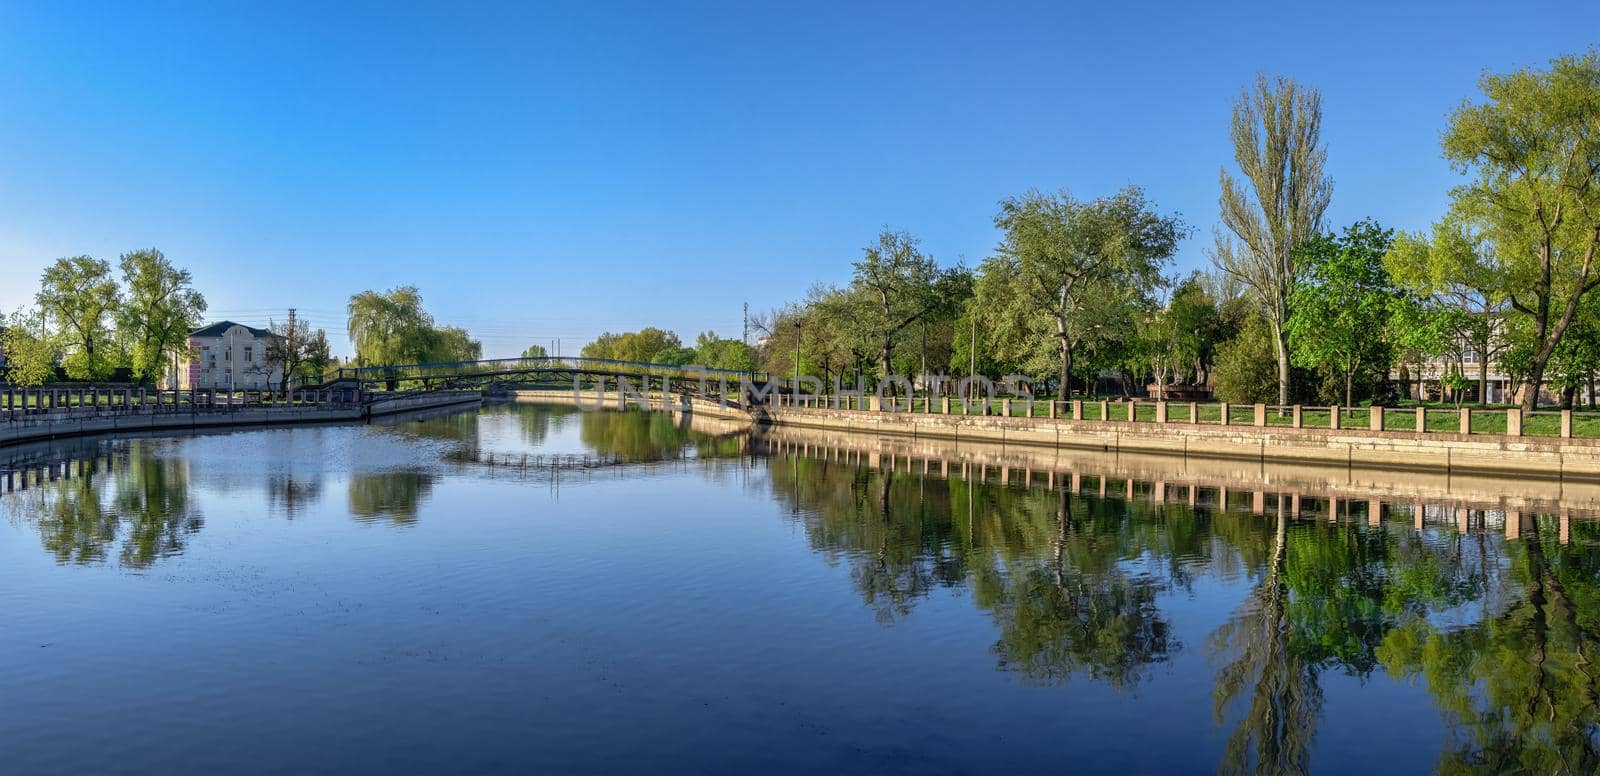 05.09.2021. Kropyvnytskyi, Ukraine. Ingul river embankment in Kropyvnytskyi, Ukraine, on a sunny spring morning